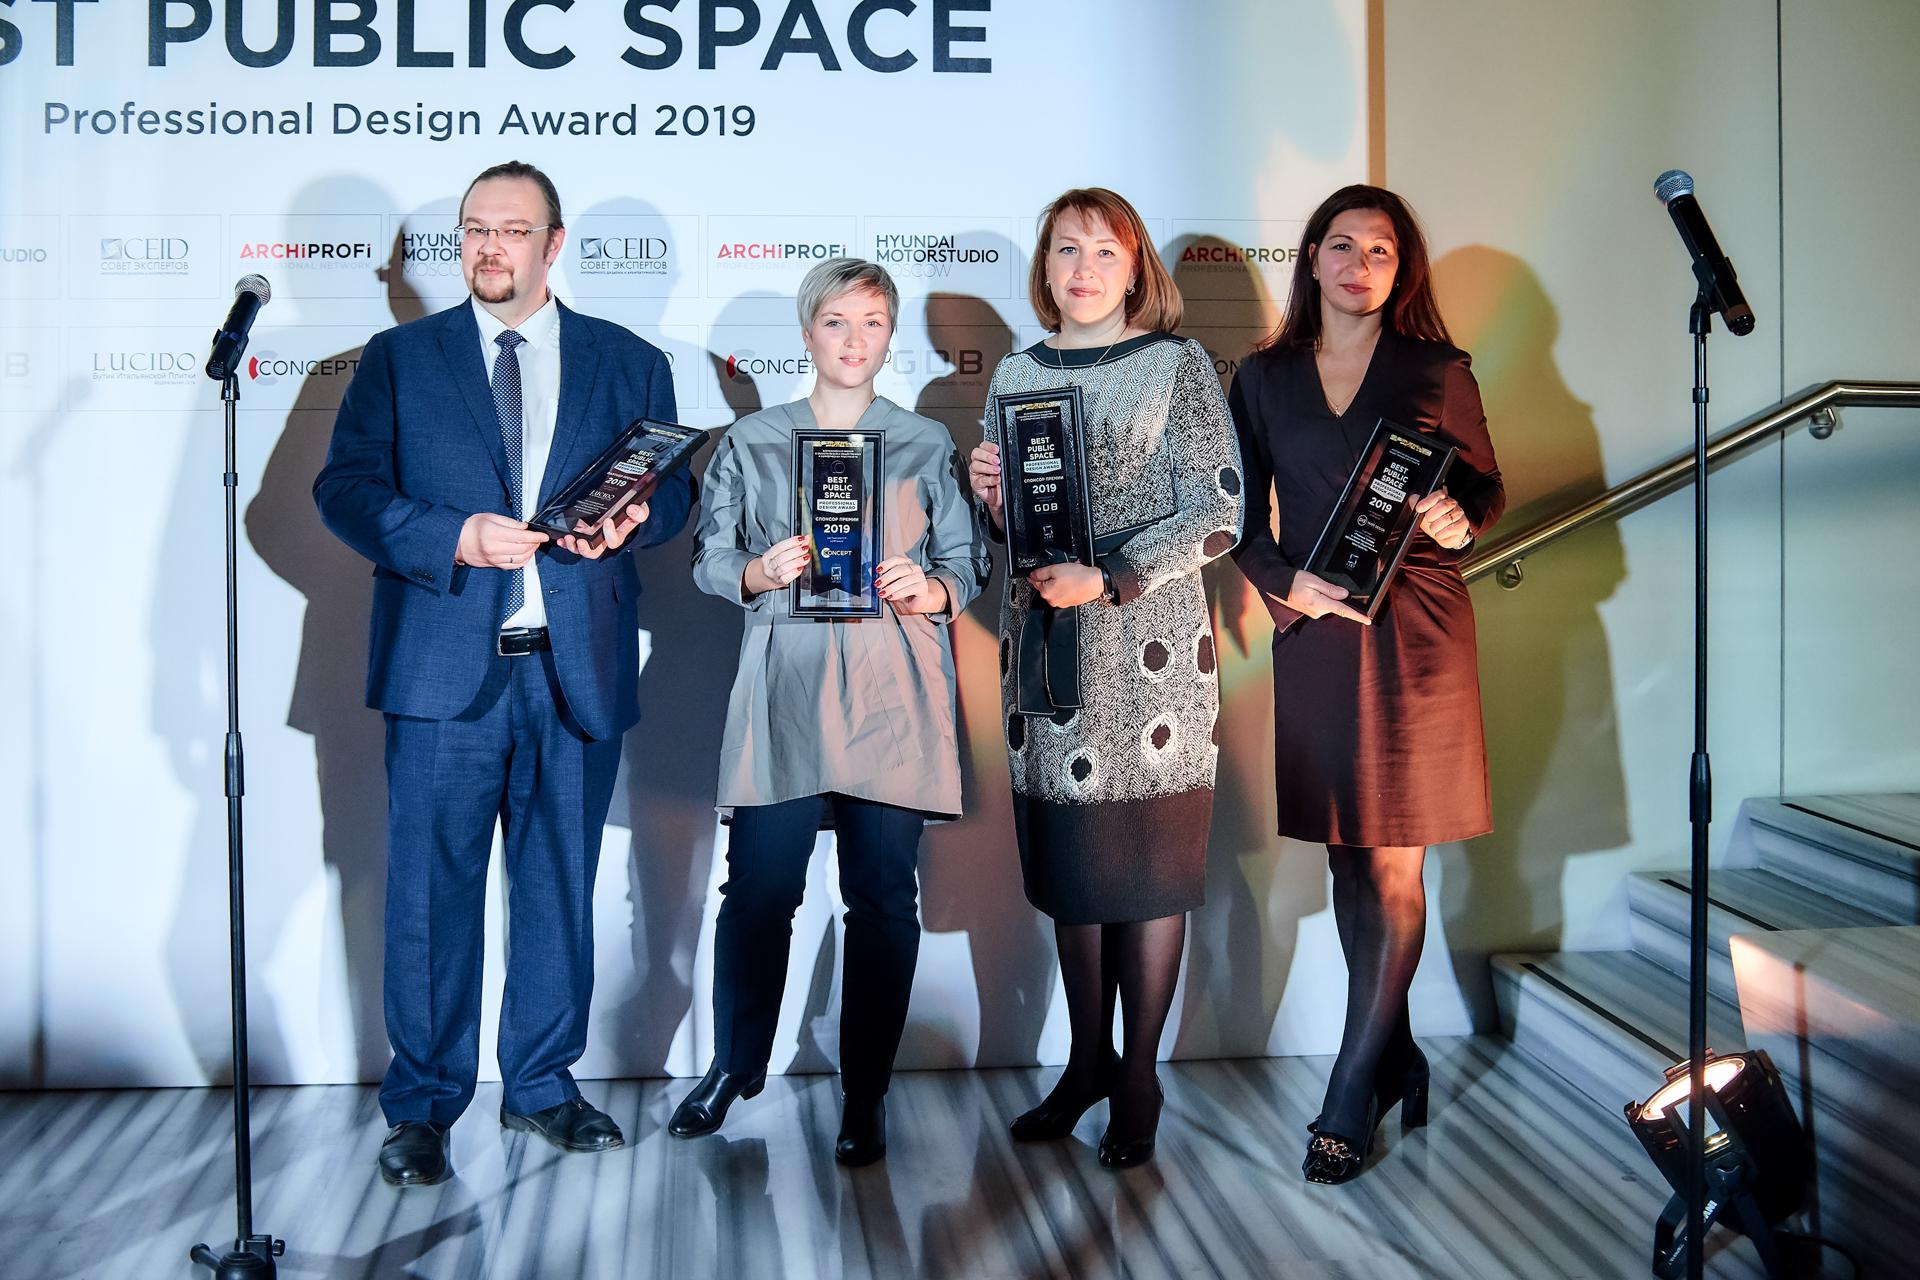 BEST PUBLIC SPACE Professional Design Award 2019